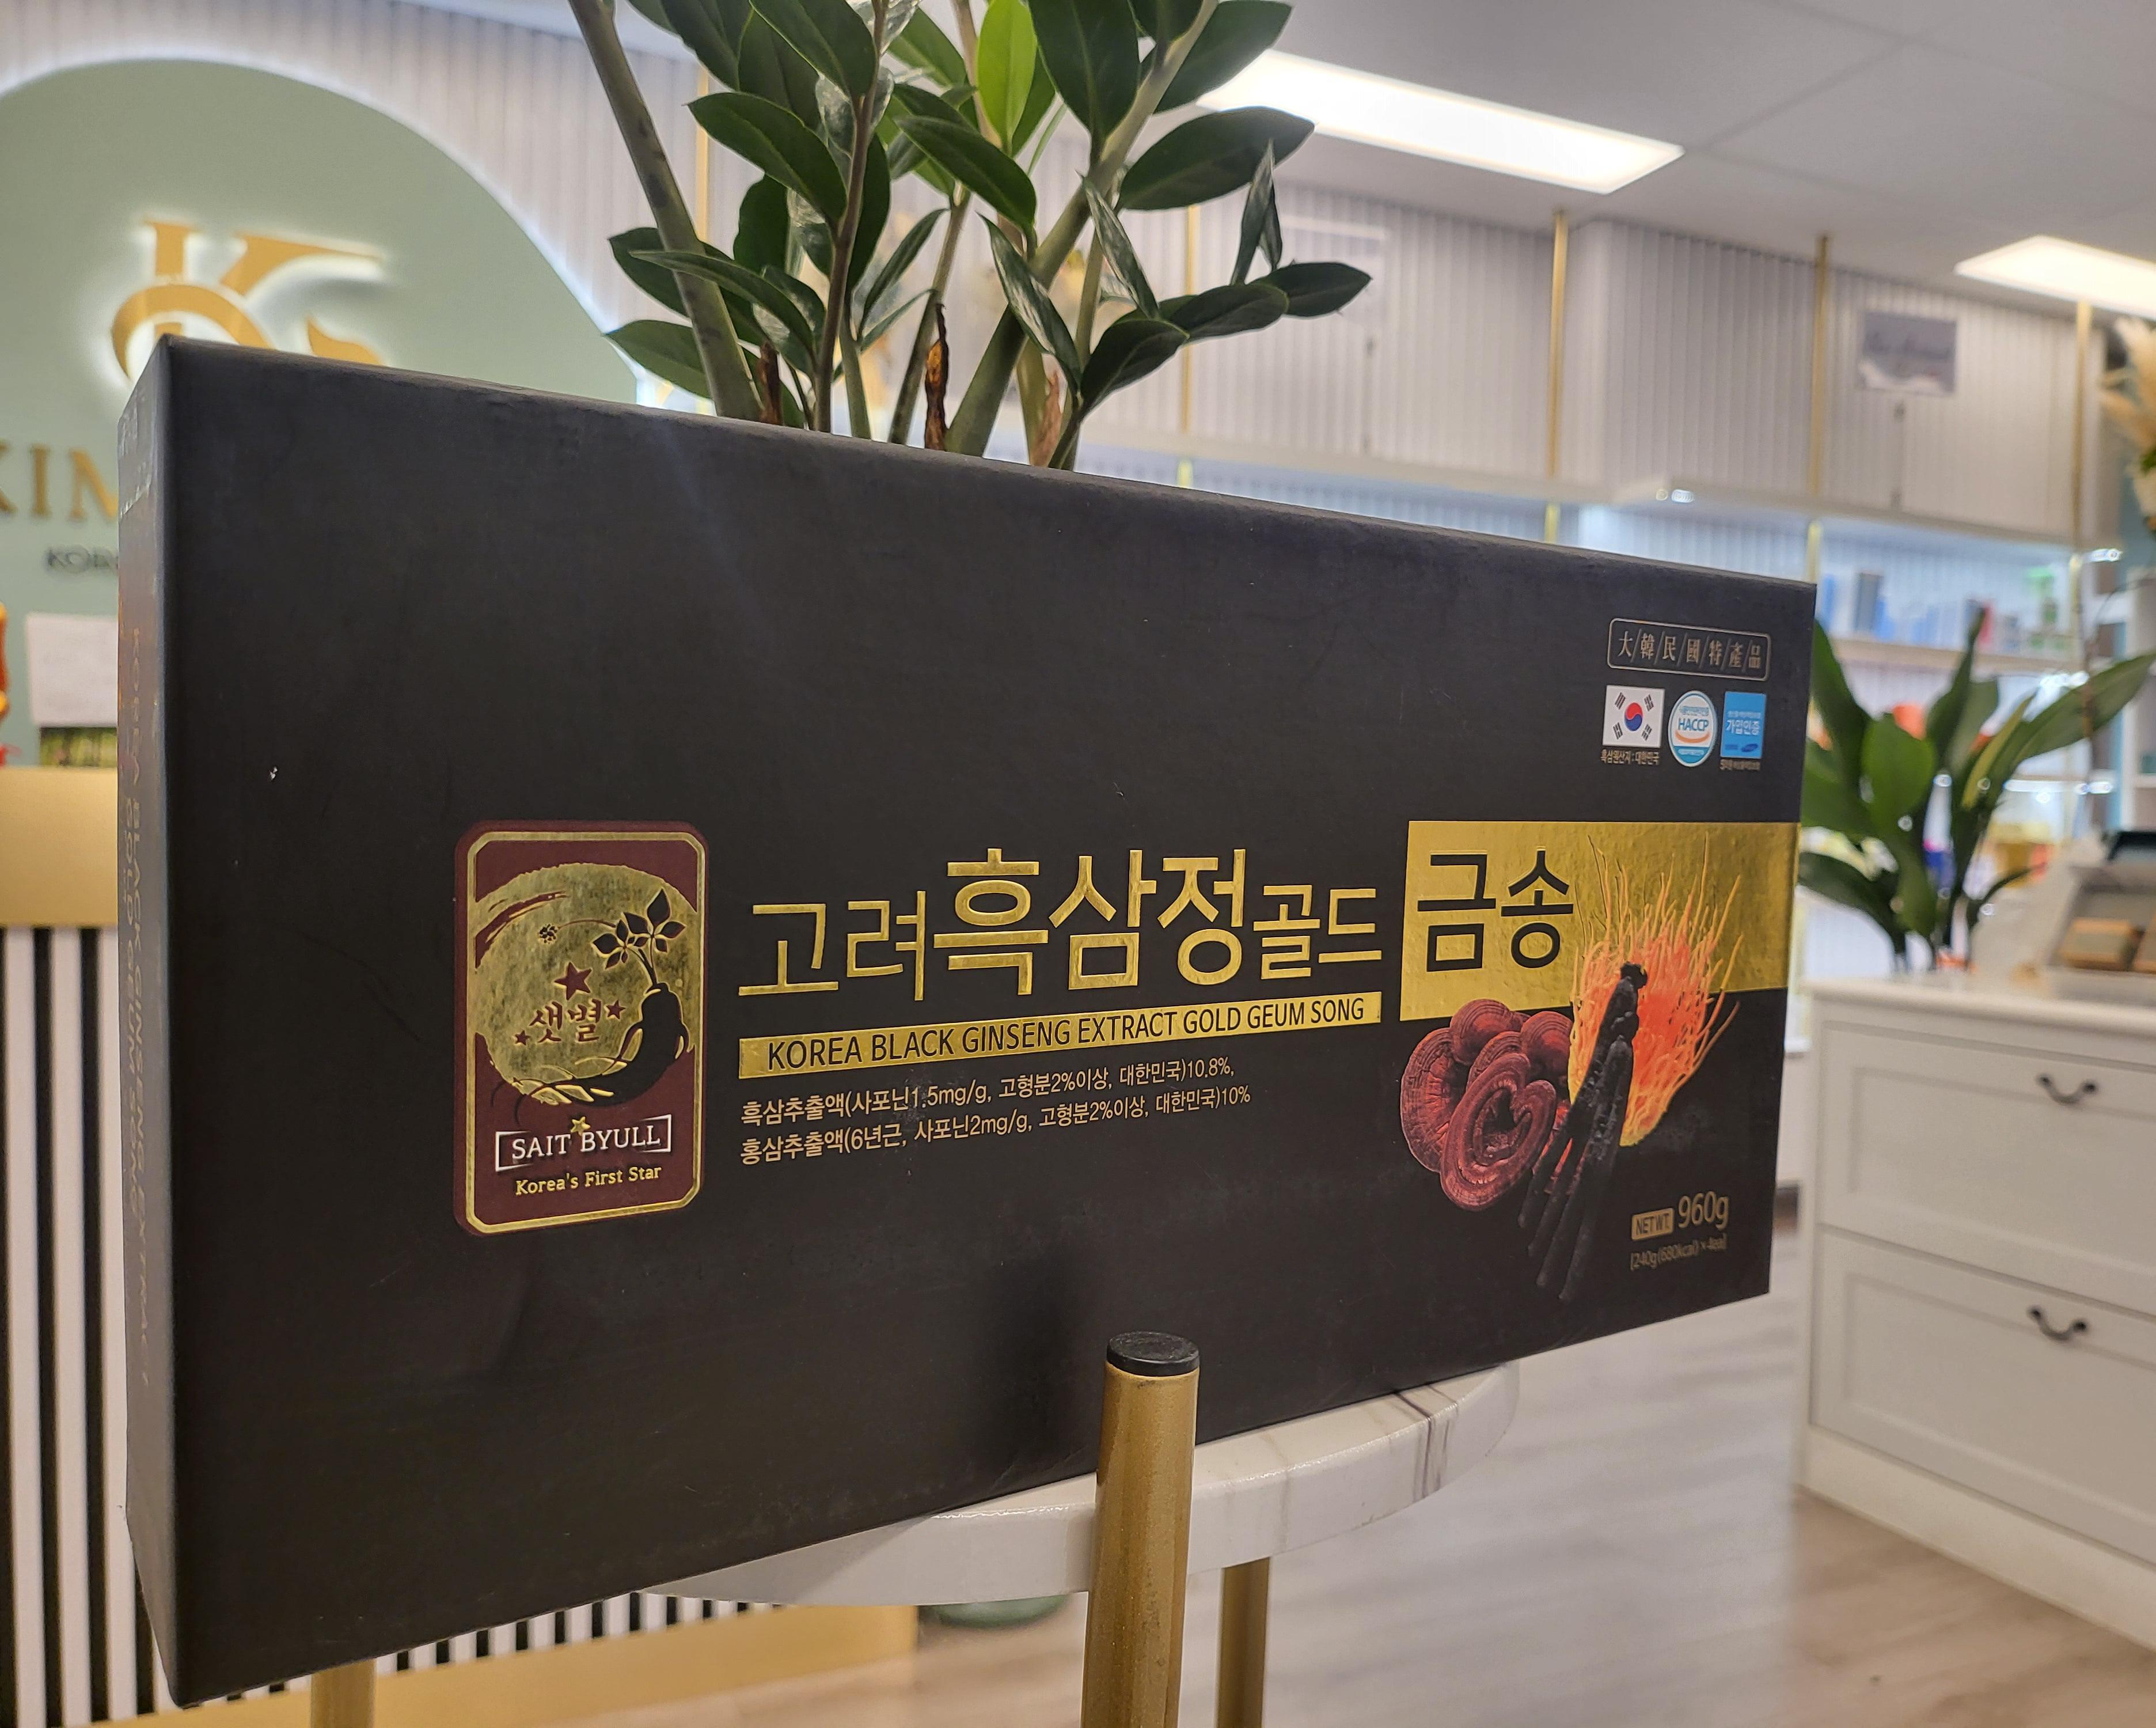 Korean 6 year Black Ginseng Extract Gold Geum Song 1 Bottle x 240g